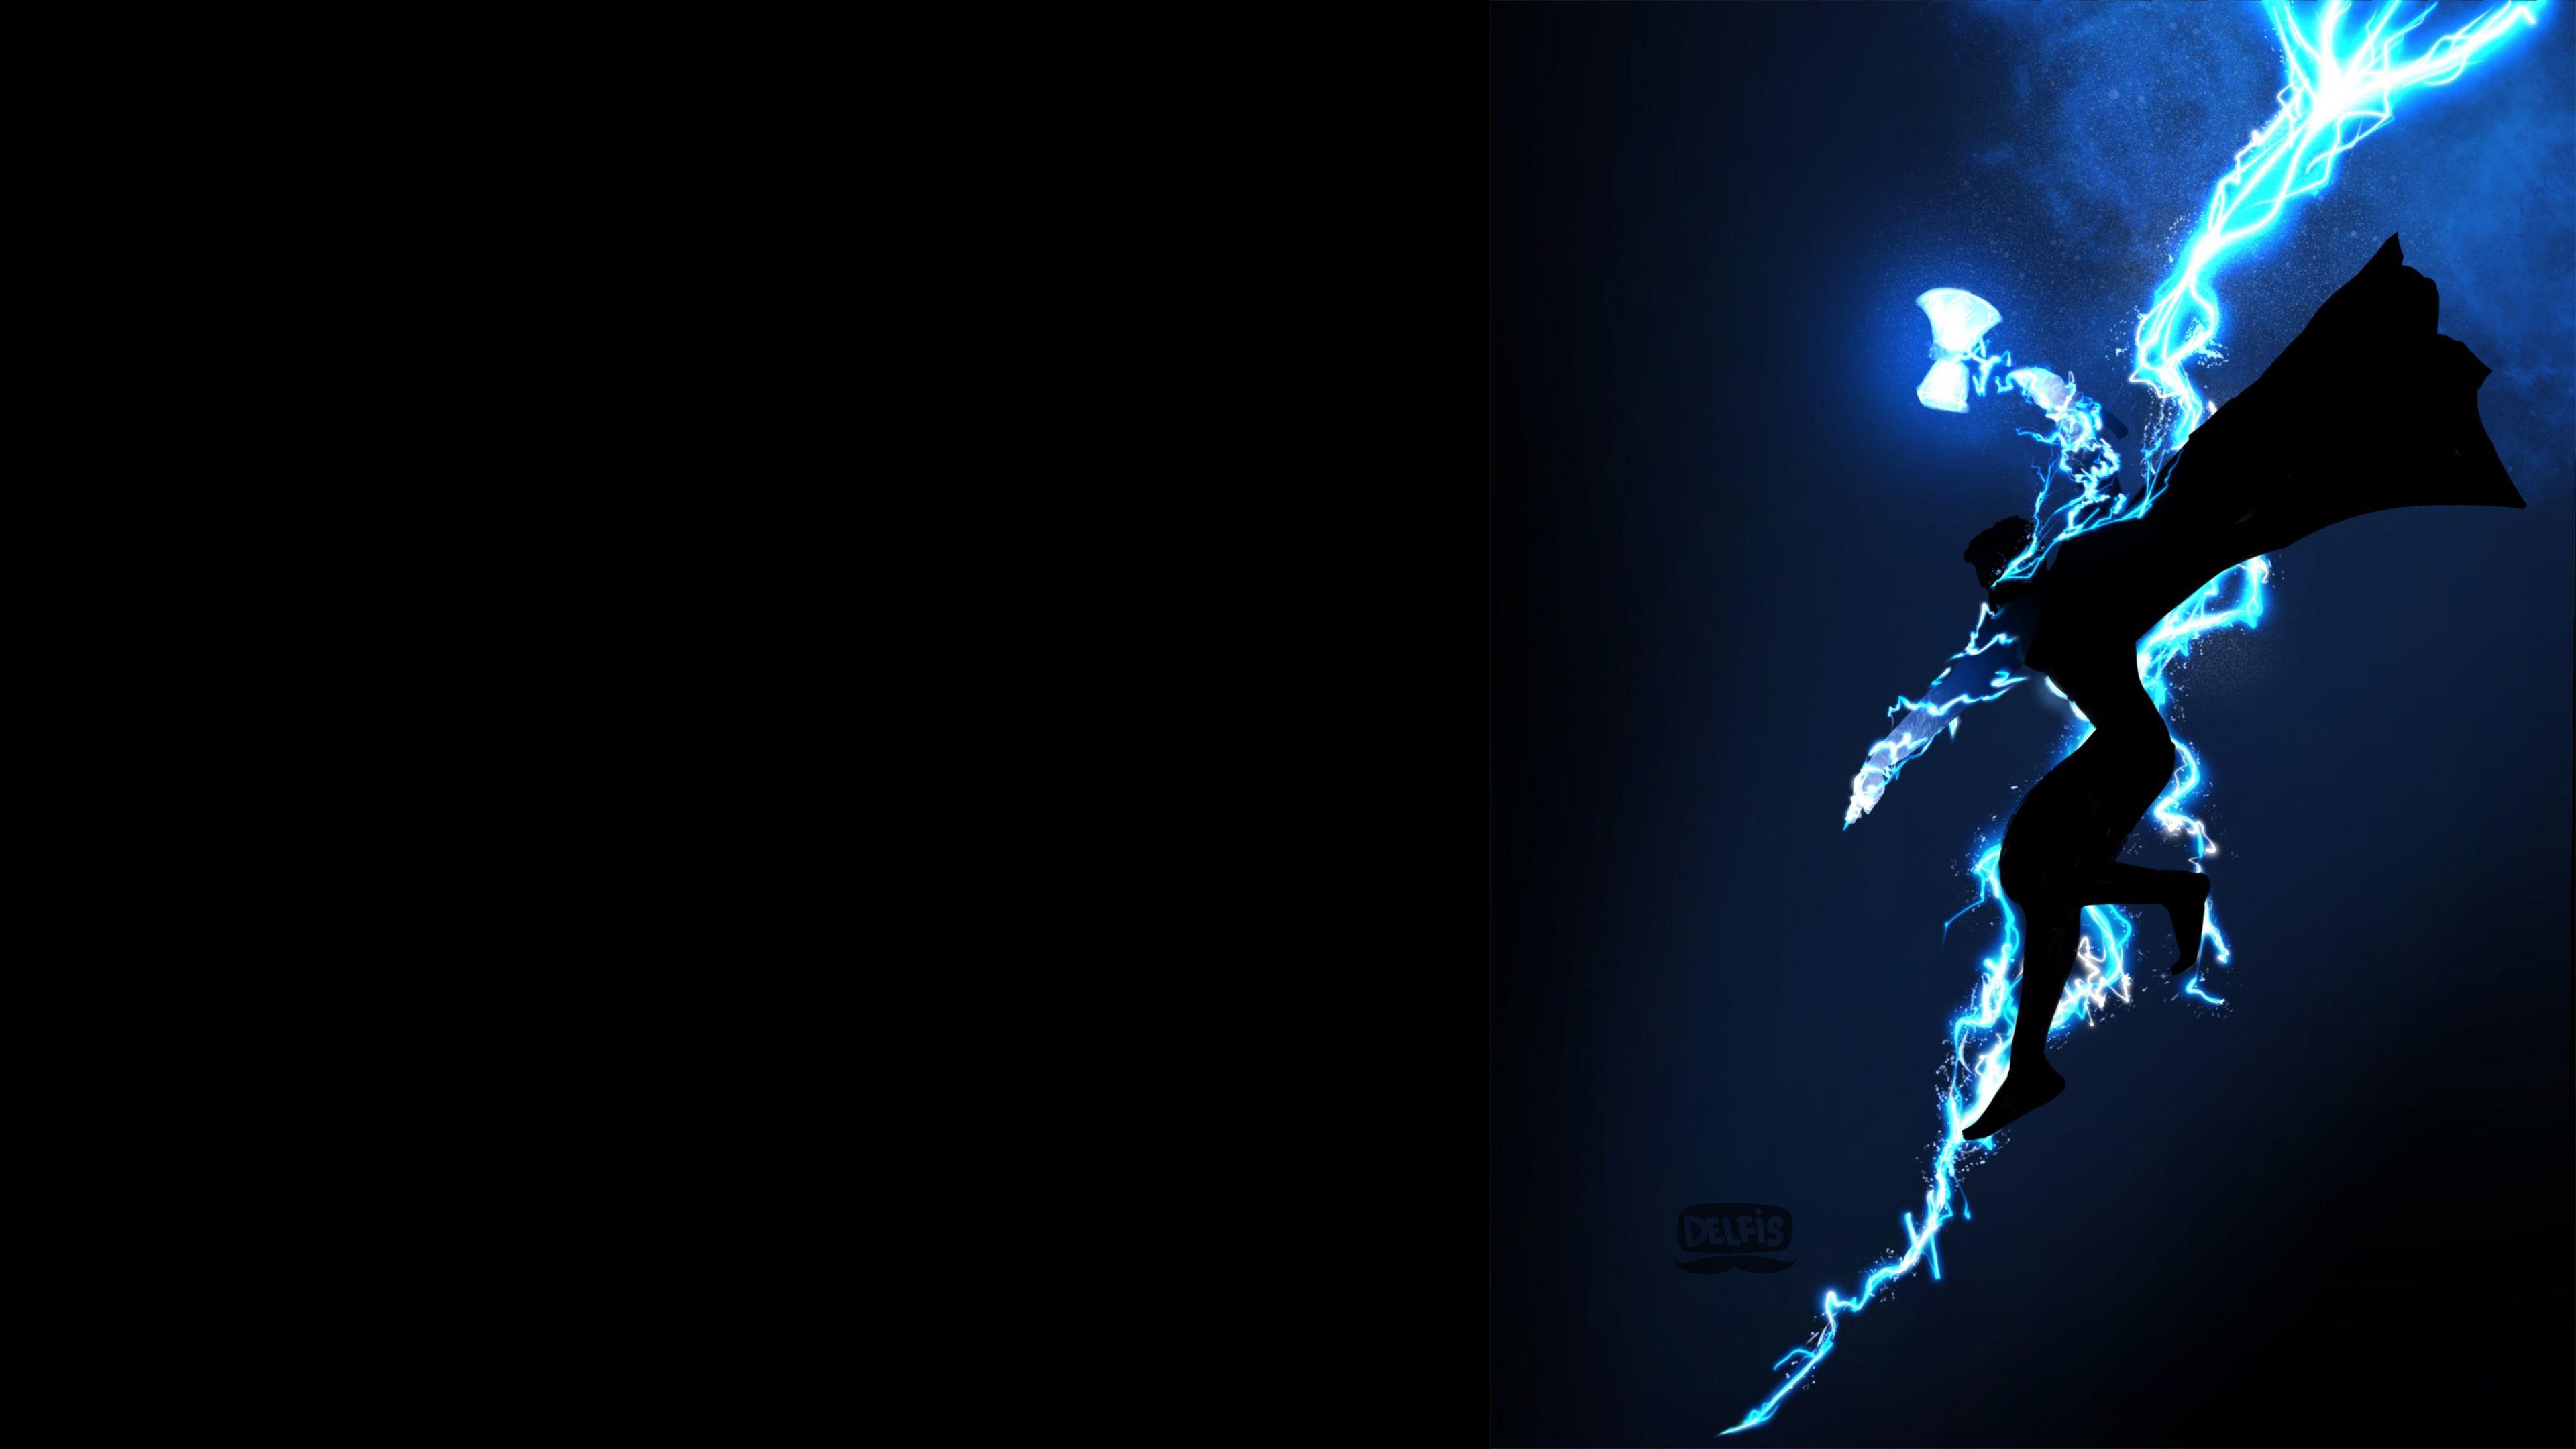 Thor Lightning 4K Wallpapers - Top Free Thor Lightning 4K Backgrounds